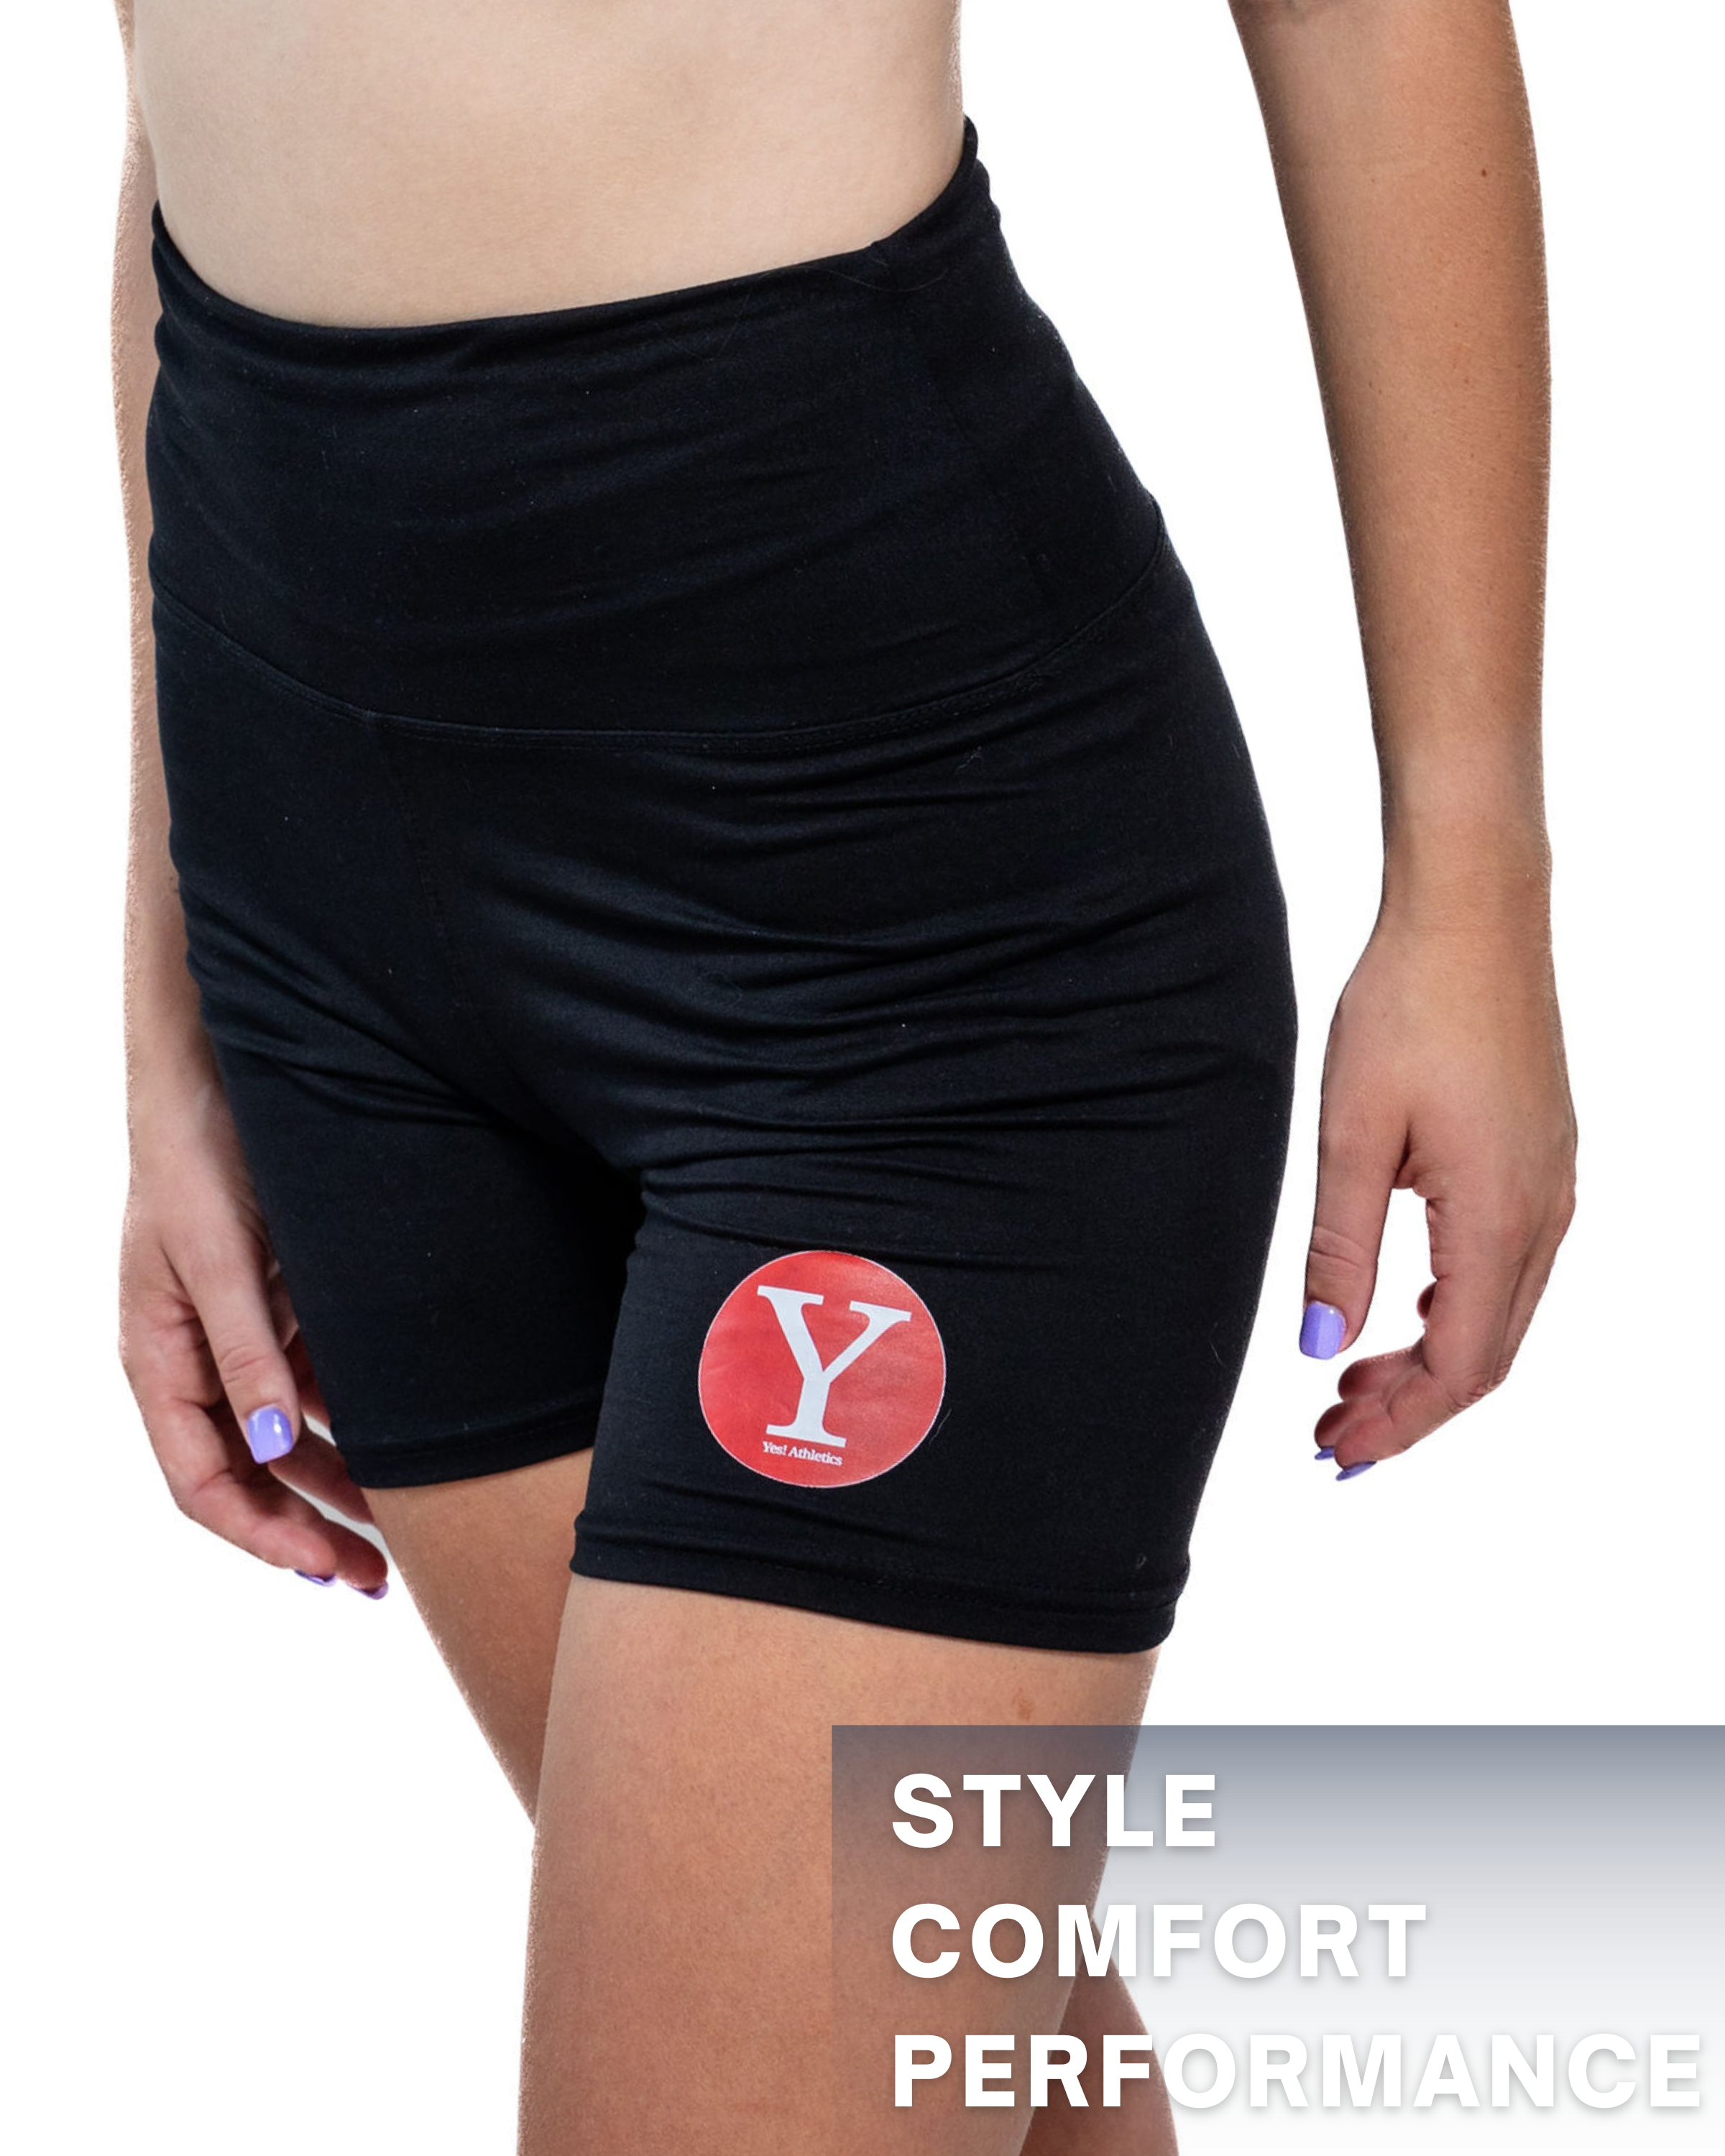 Ultimate Comfort Bike Shorts for Women